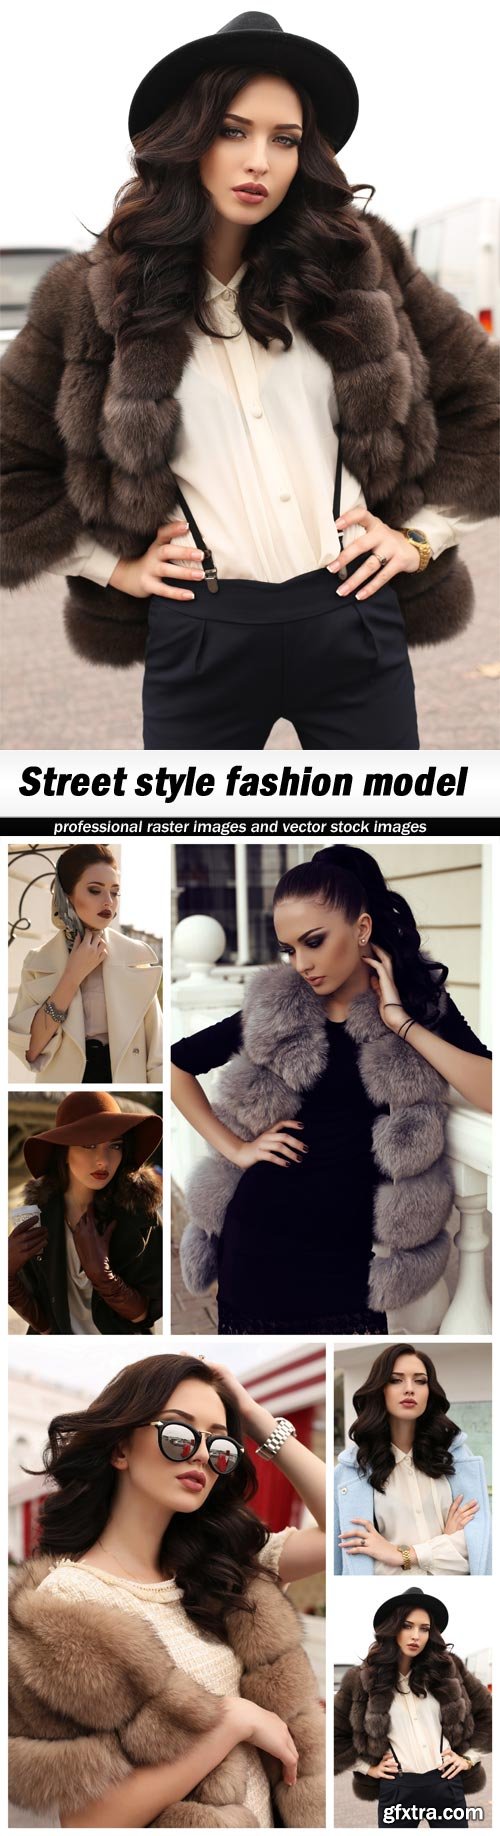 Street style fashion model - 6 UHQ JPEG